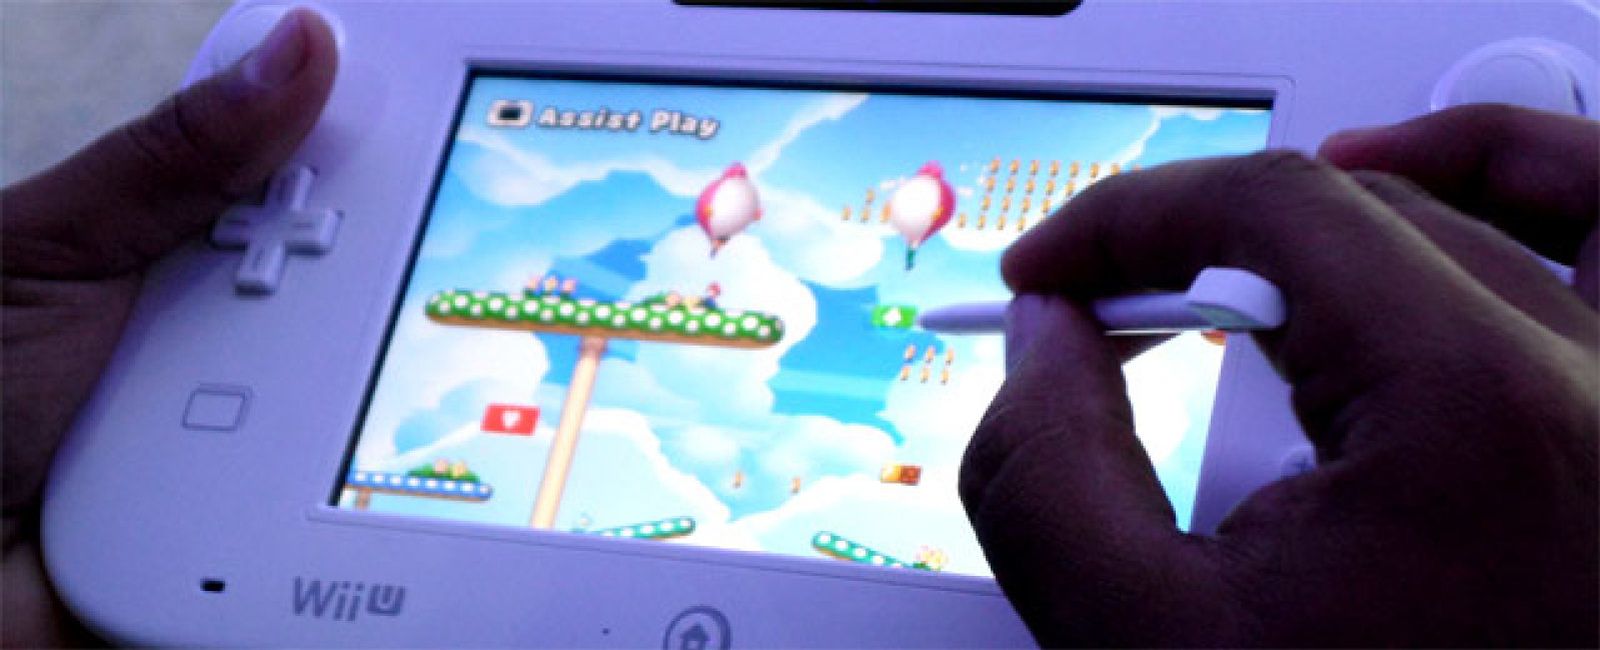 Foto: Nintendo promete novedades de Wii U para esta misma semana